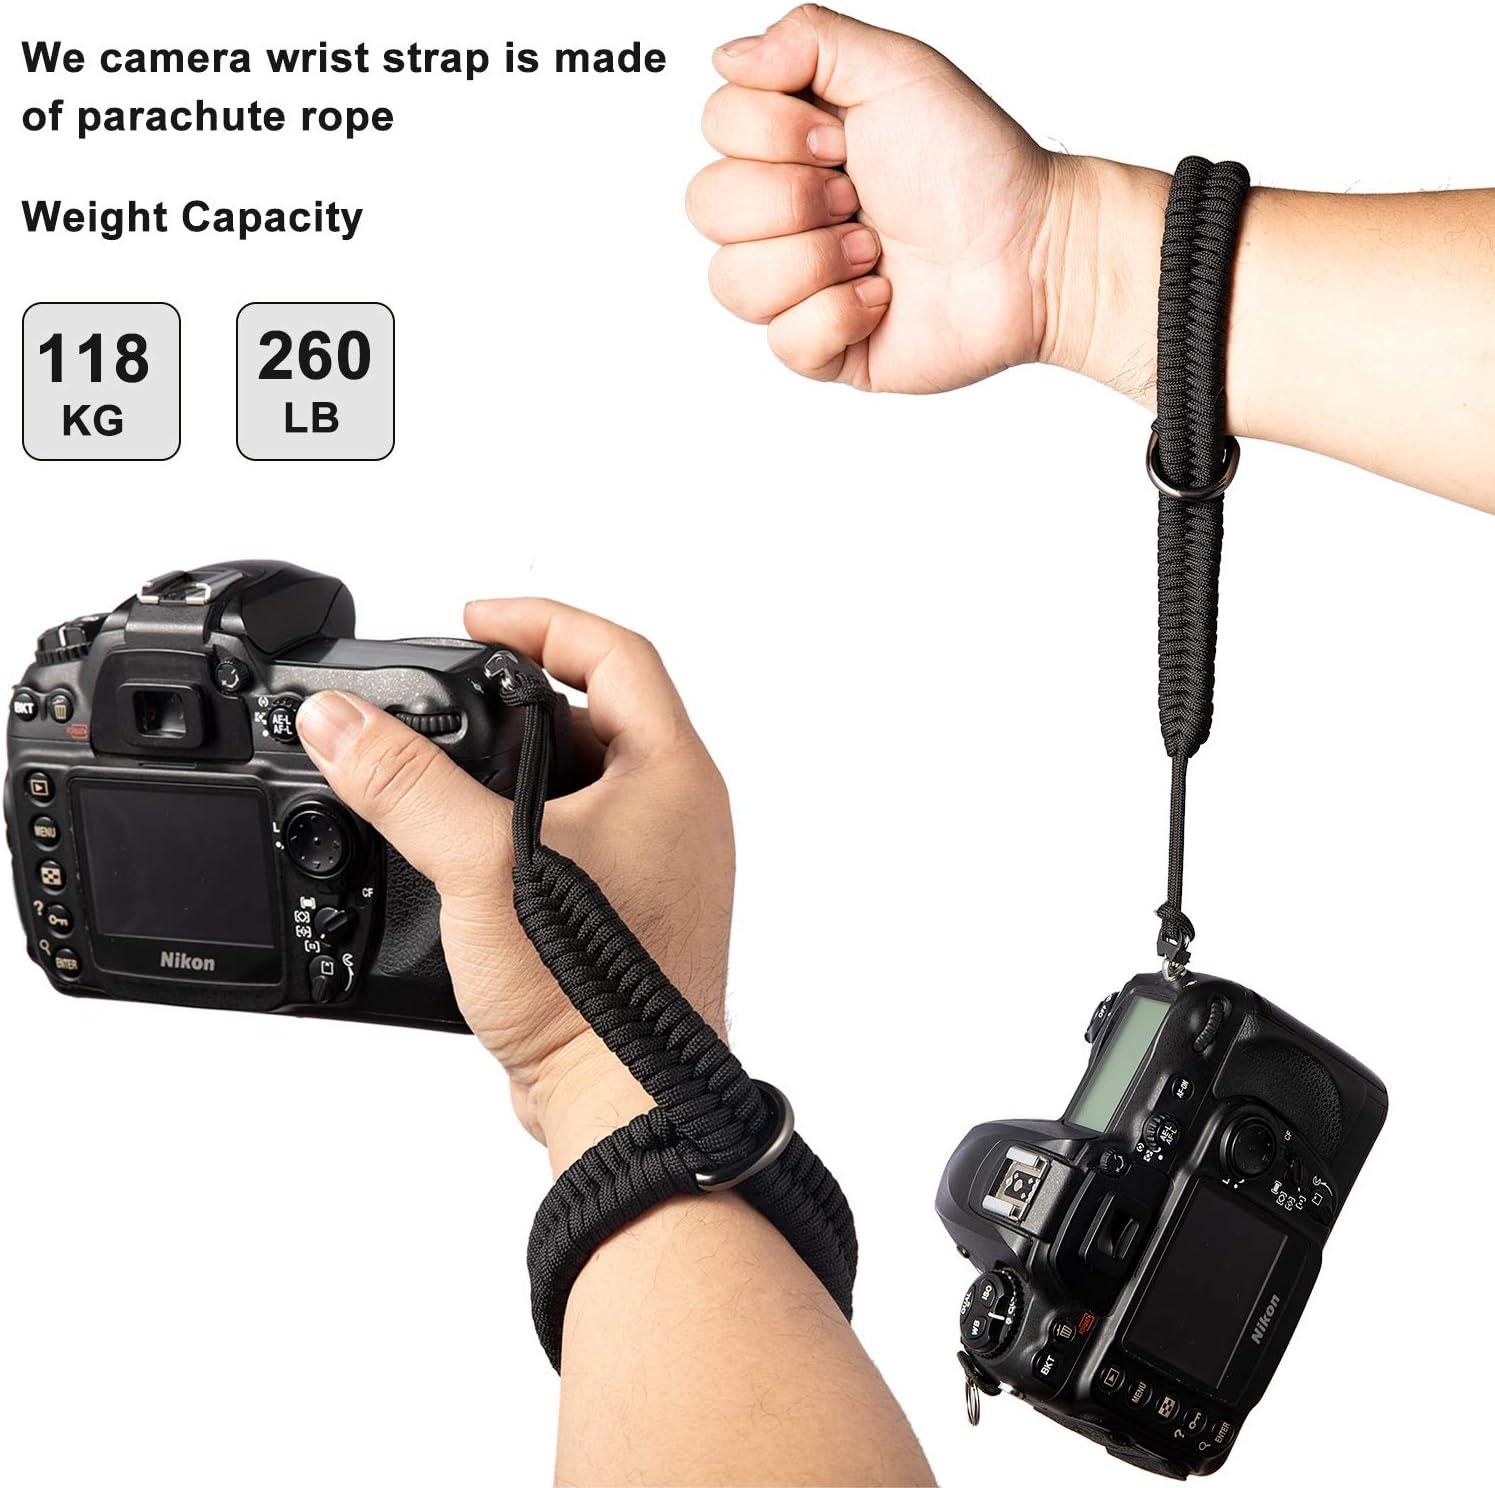 handcrafted leather camera straps for Fujifilm X100, fuji x100s wrist strap